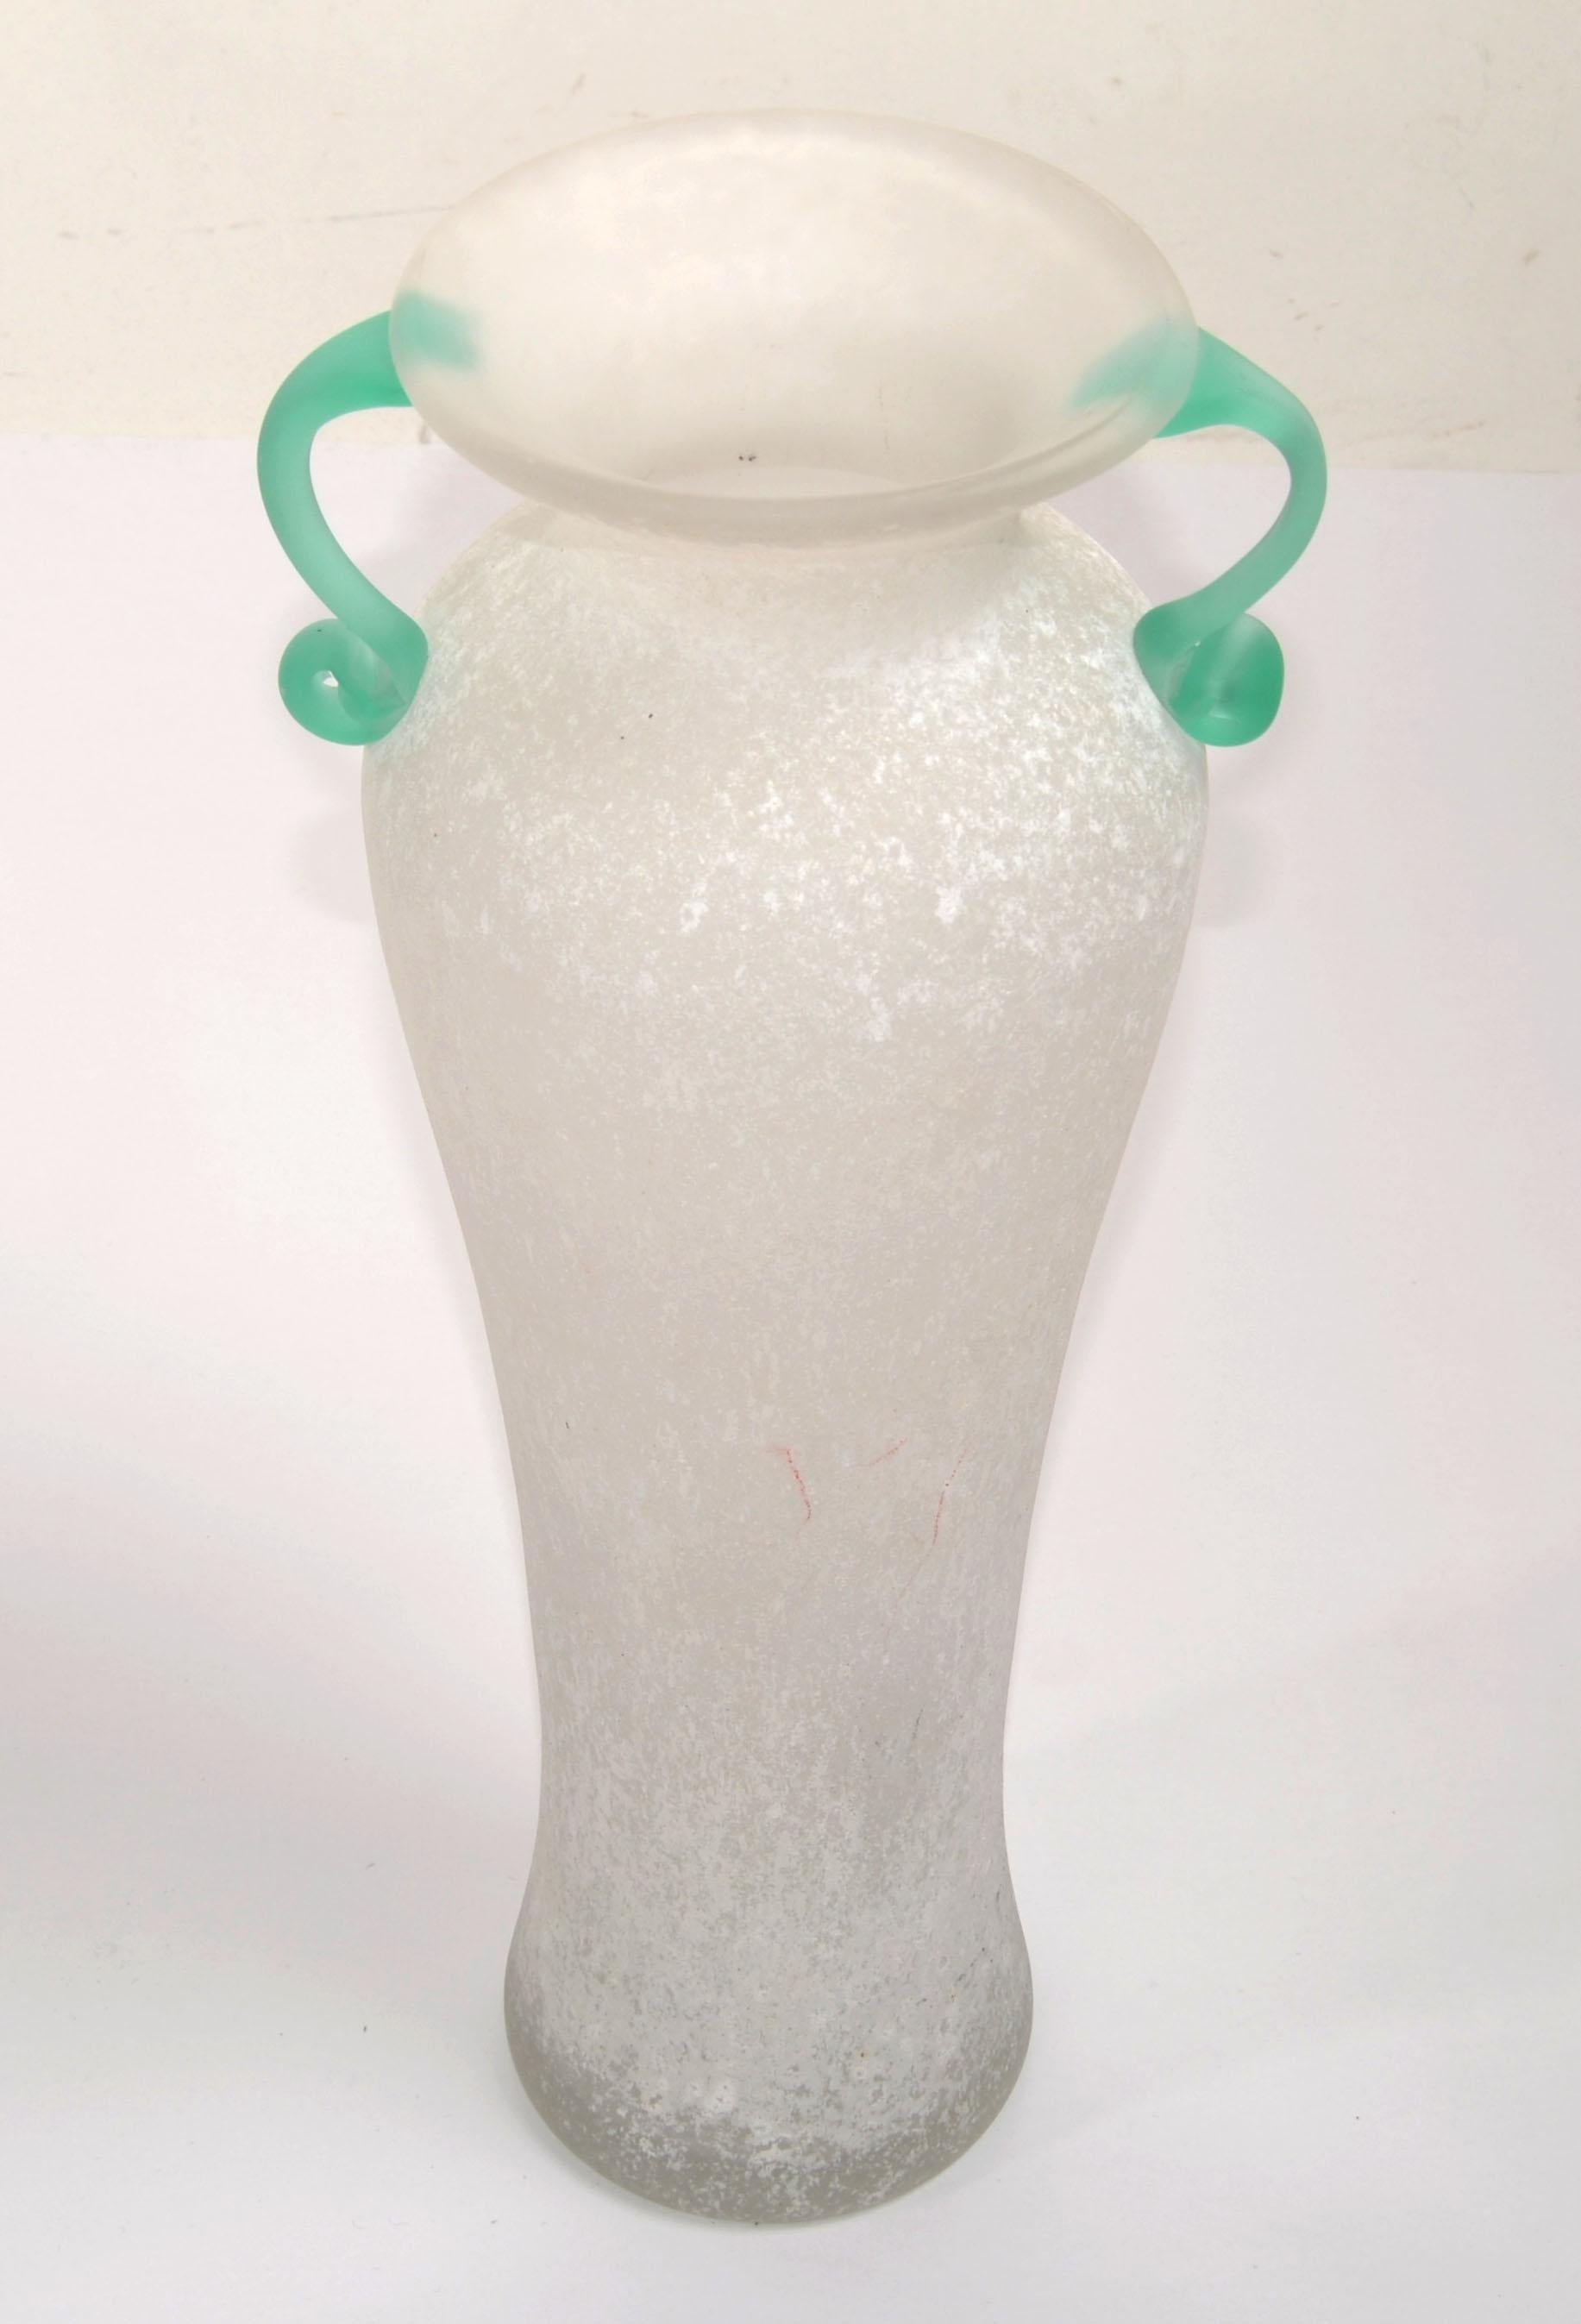 Archimede Seguso Italy Scavo Bianco white & mint green Art Glass Murano Flower vase, vessel, decanter Mid-Century Modern made by Seguso Vetri d'Arte Italy circa in 1980s.
En très bon état vintage, usure normale due à l'Histoire. 
Pas de fissures,